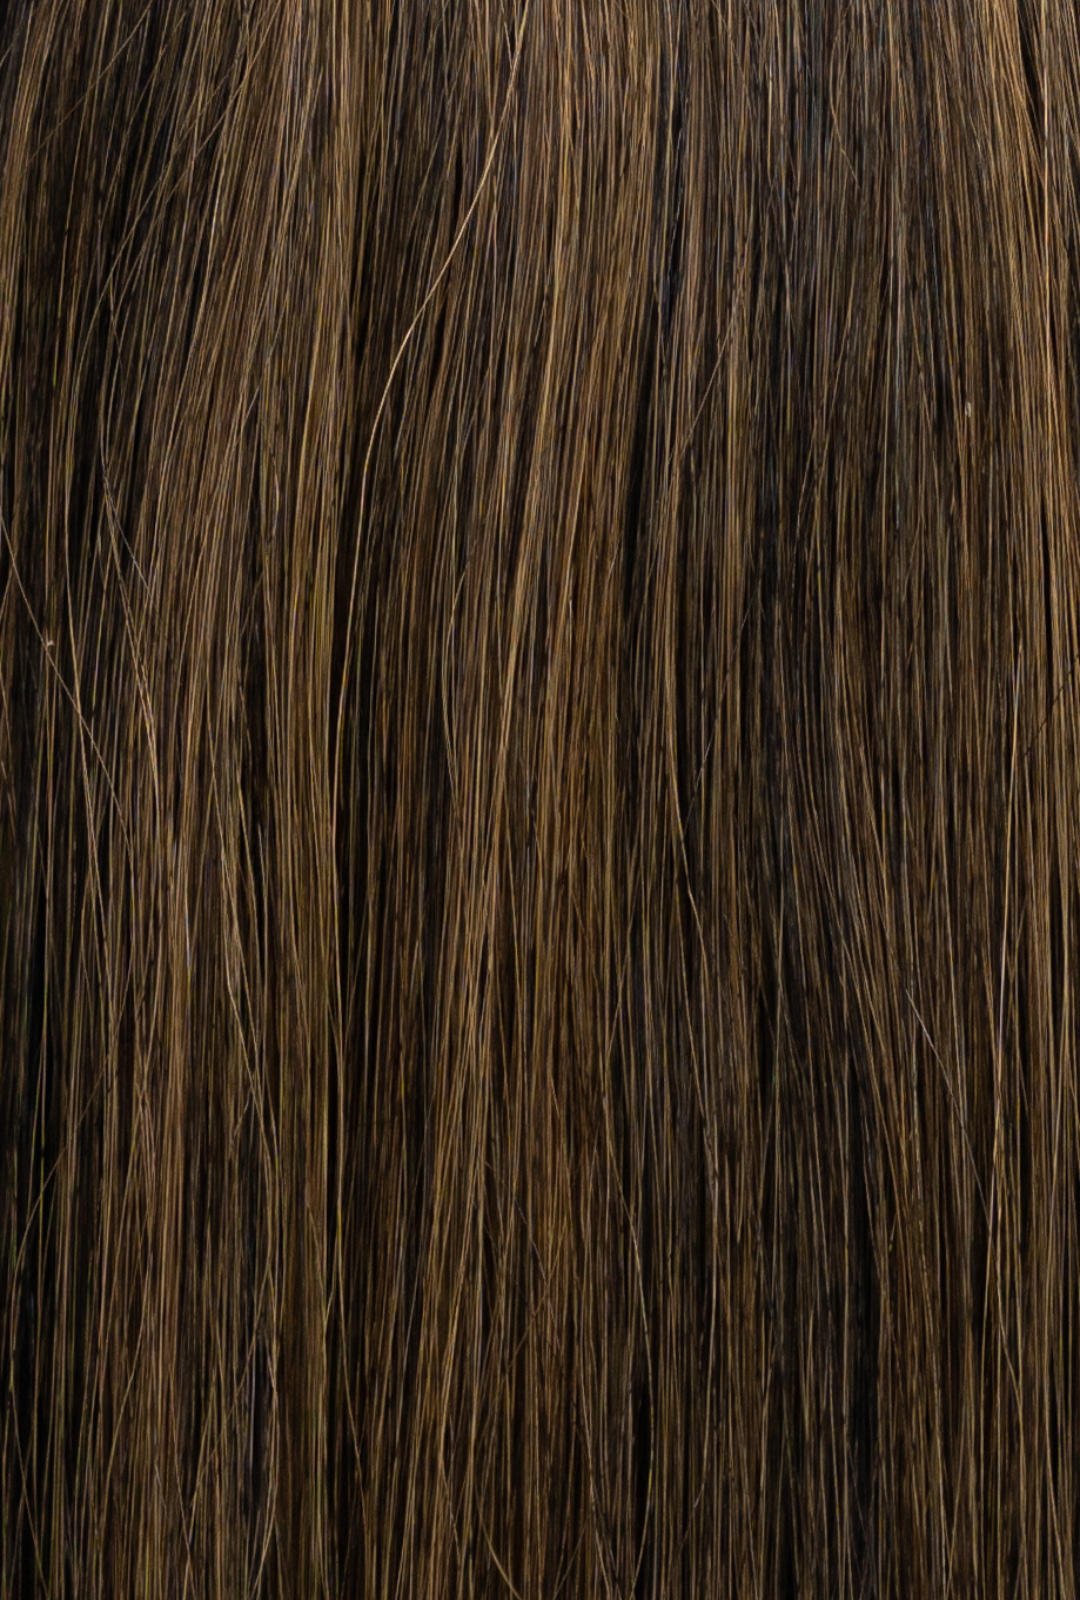 Laced Hair Keratin Bond Extensions Dimensional #1B/5